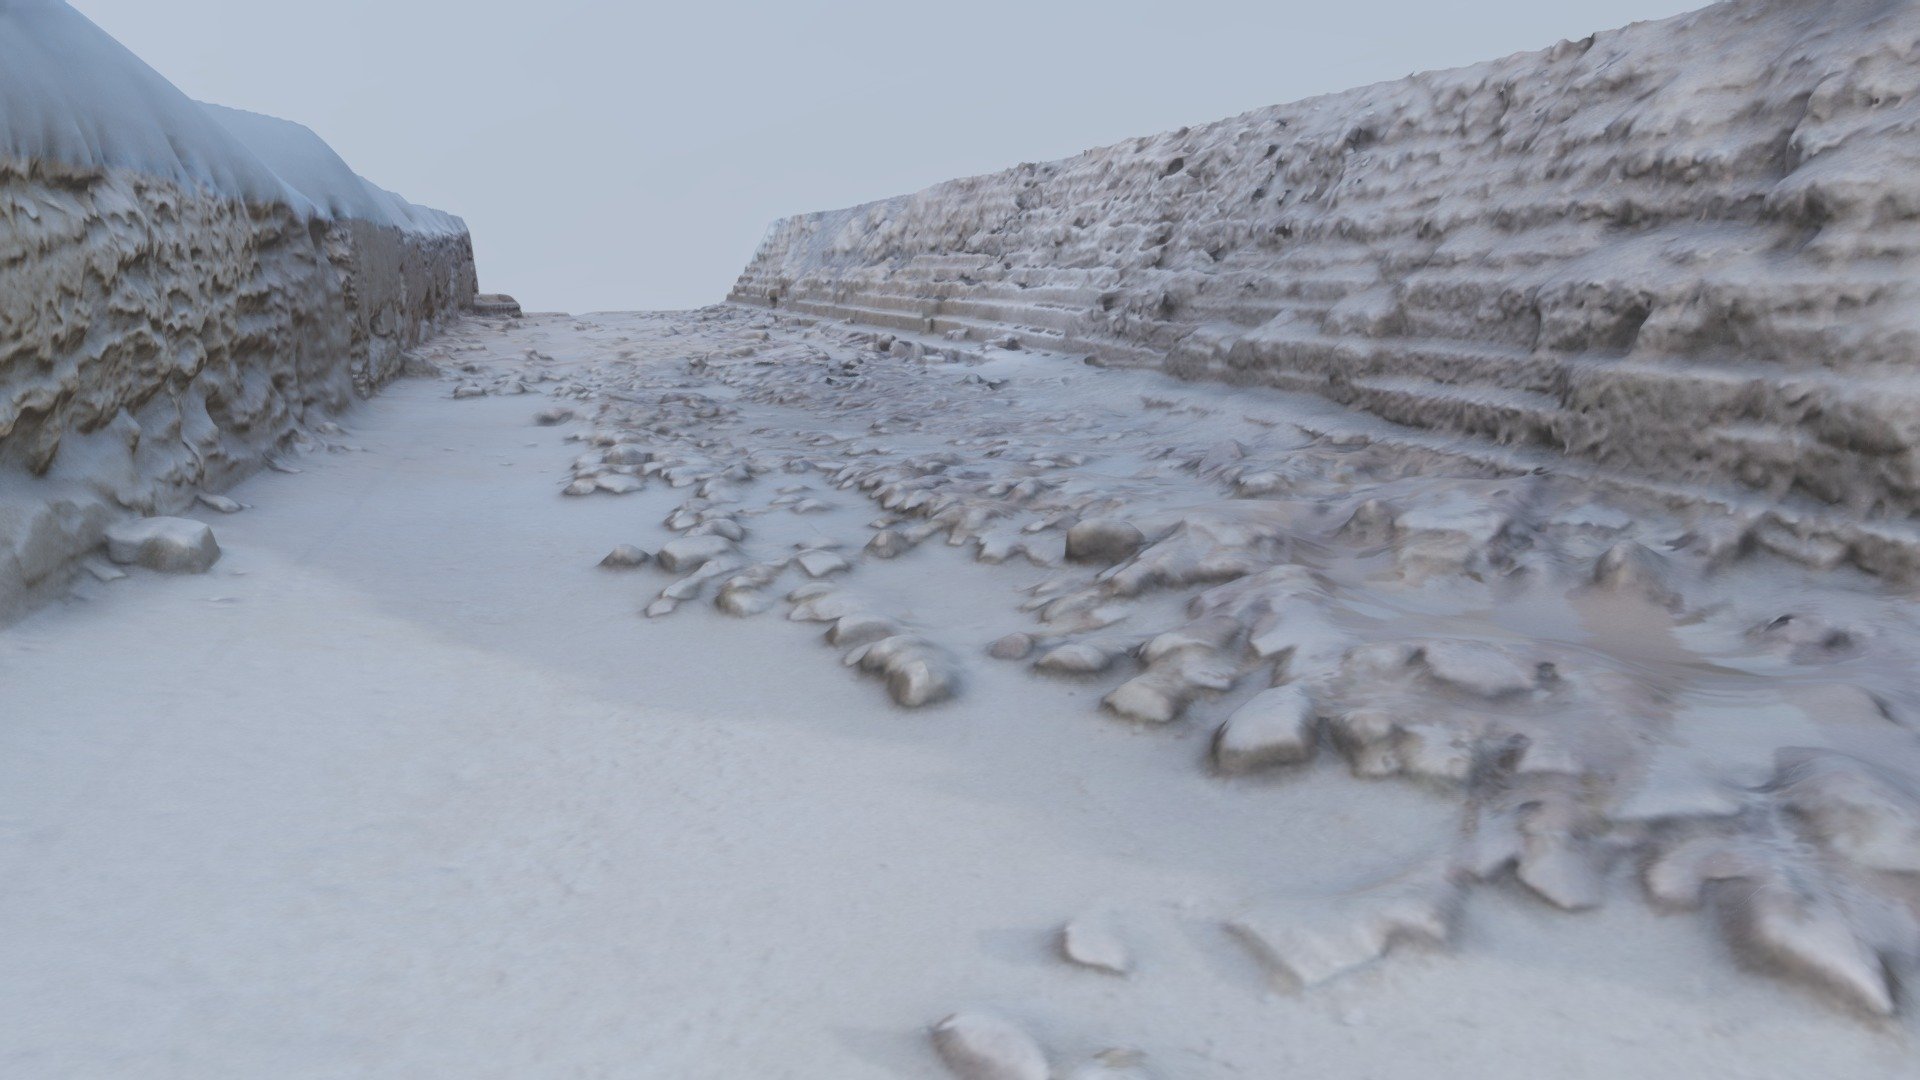 Bedrock and rubble near Pyramid of Khafre - 2019